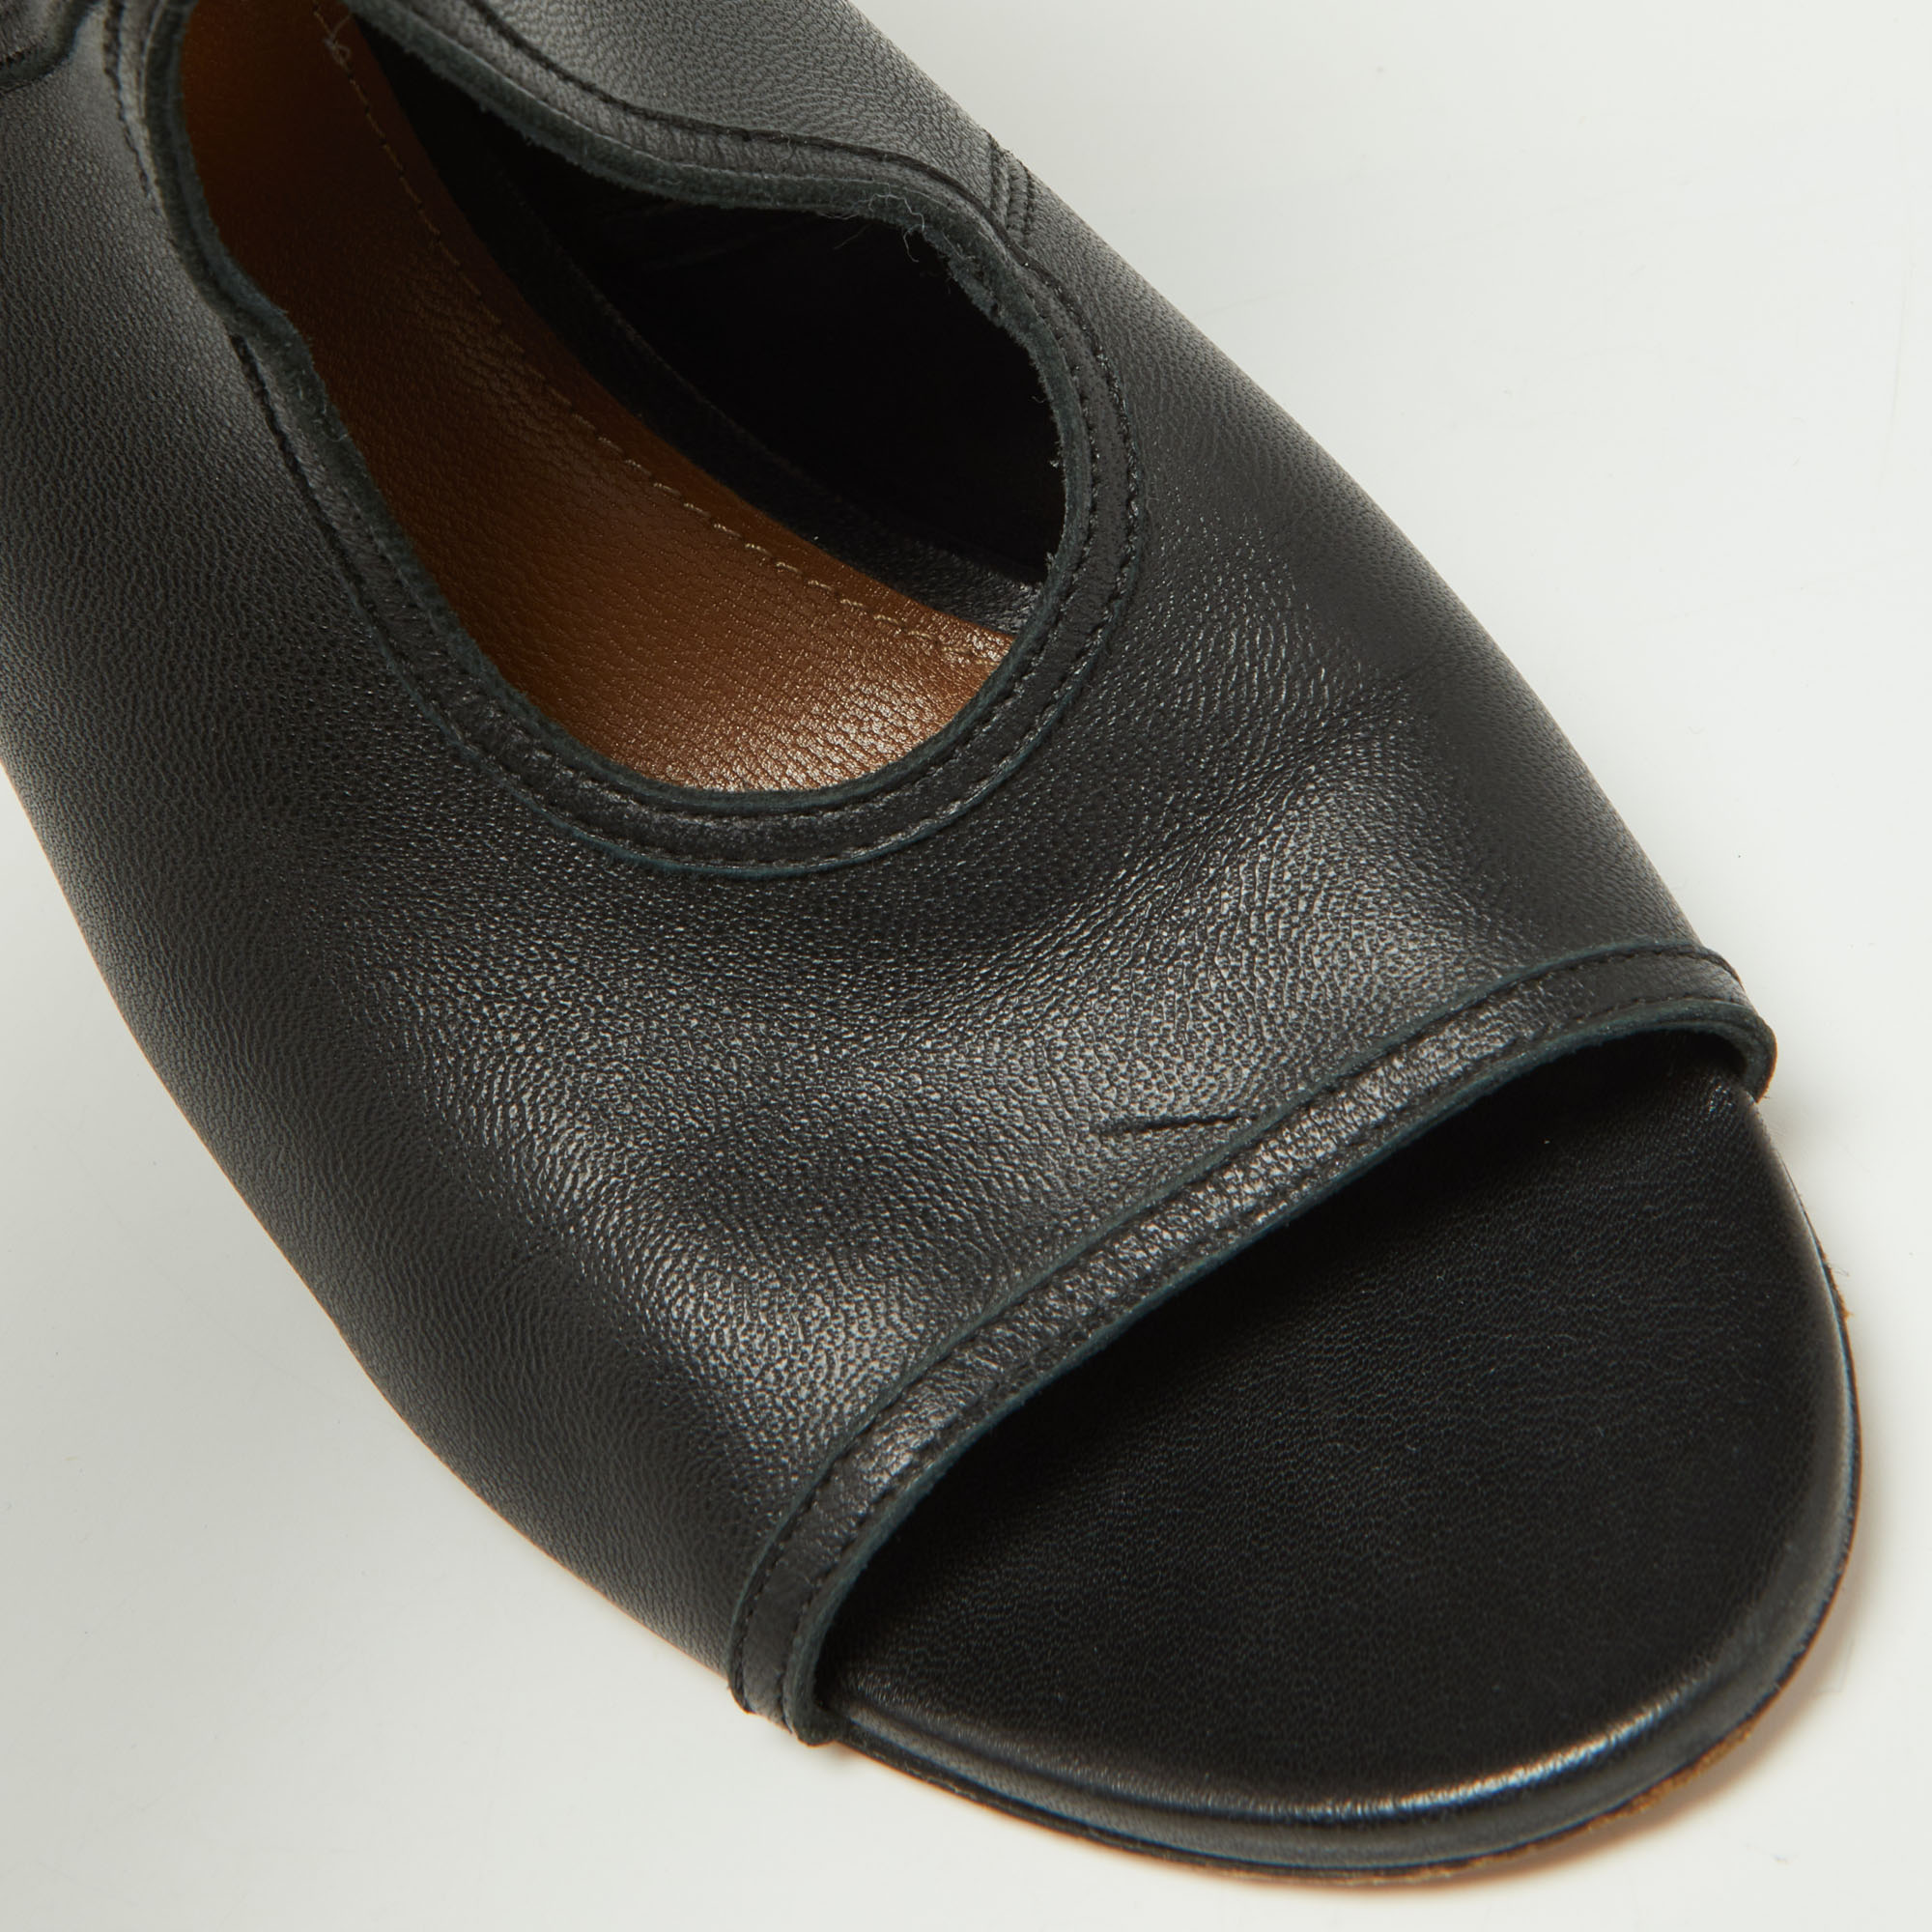 Aquazzura Black Leather Sexy Thing Sandals Size 39.5